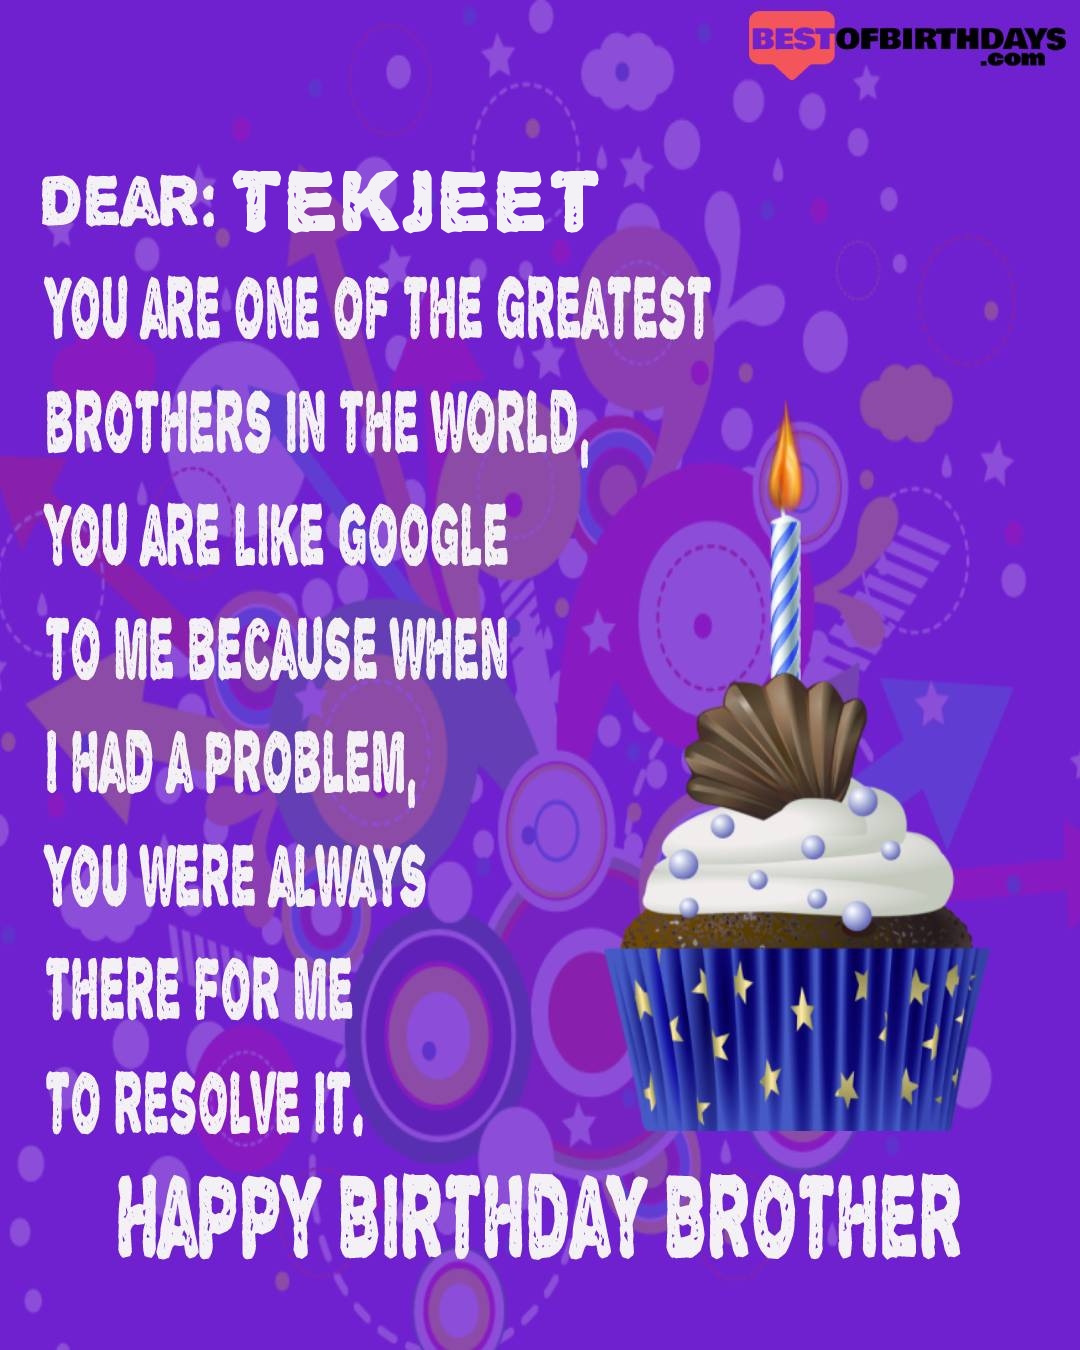 Happy birthday tekjeet bhai brother bro